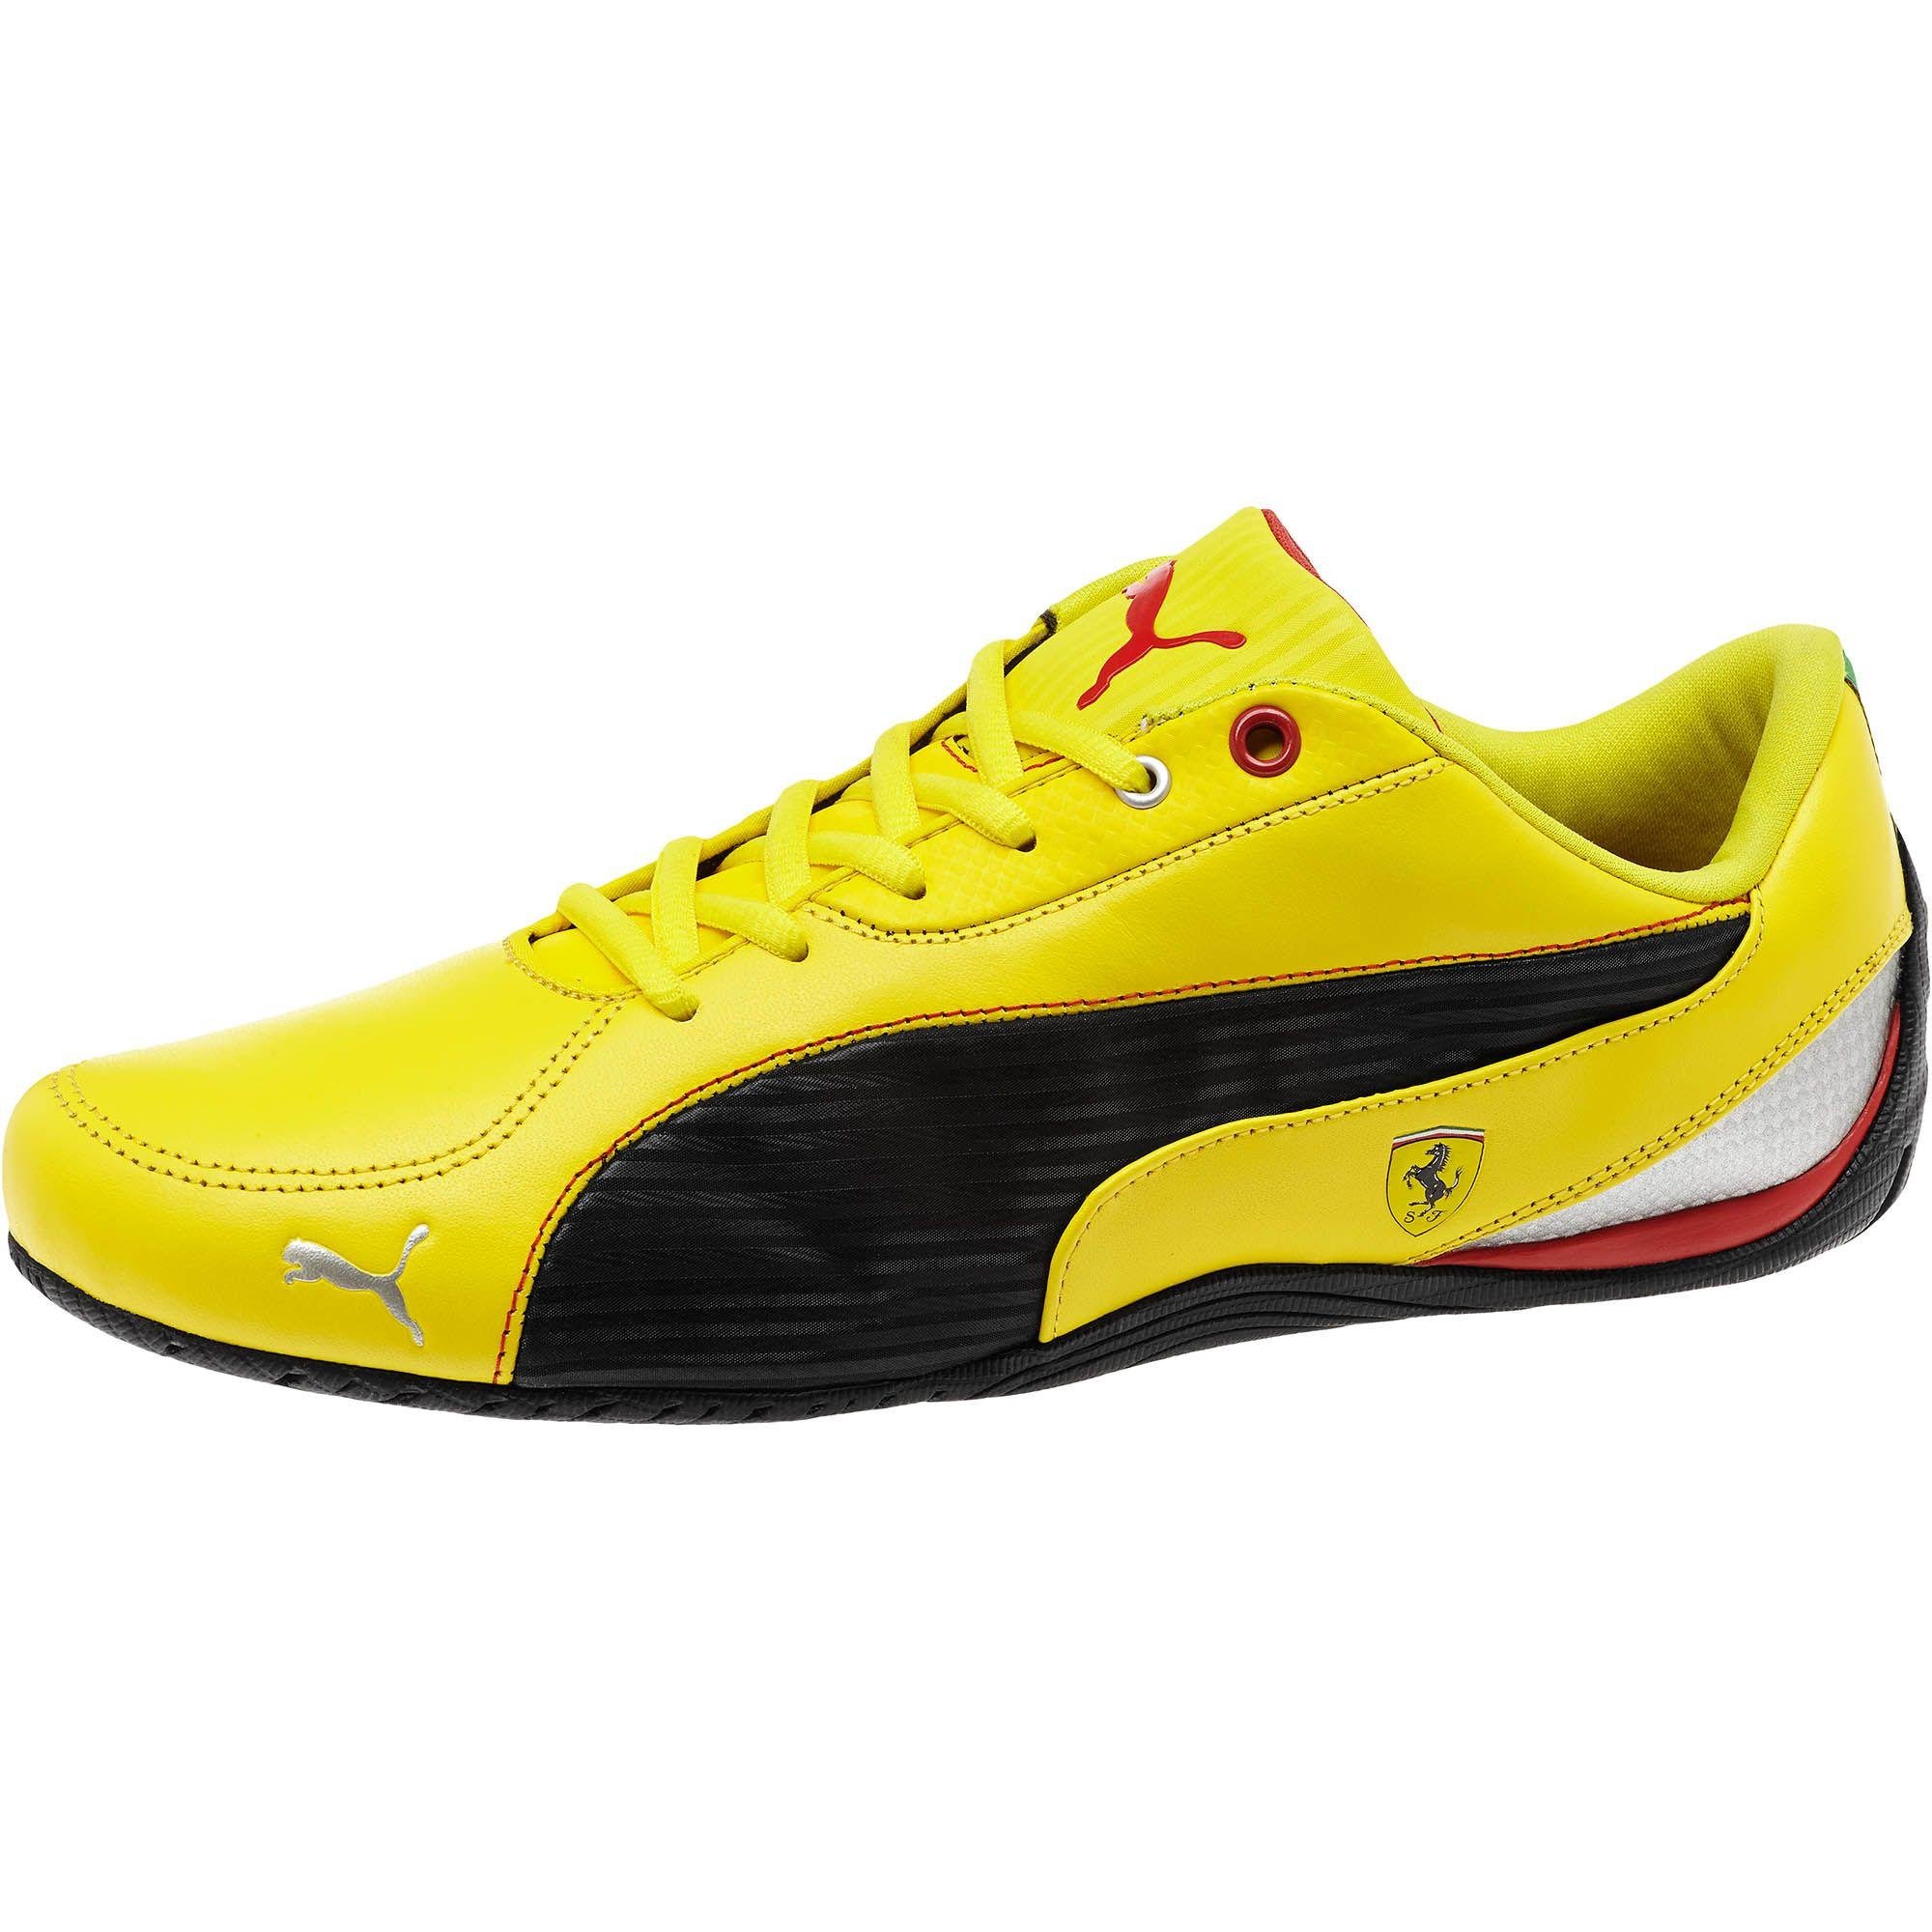 puma ferrari shoes black yellow